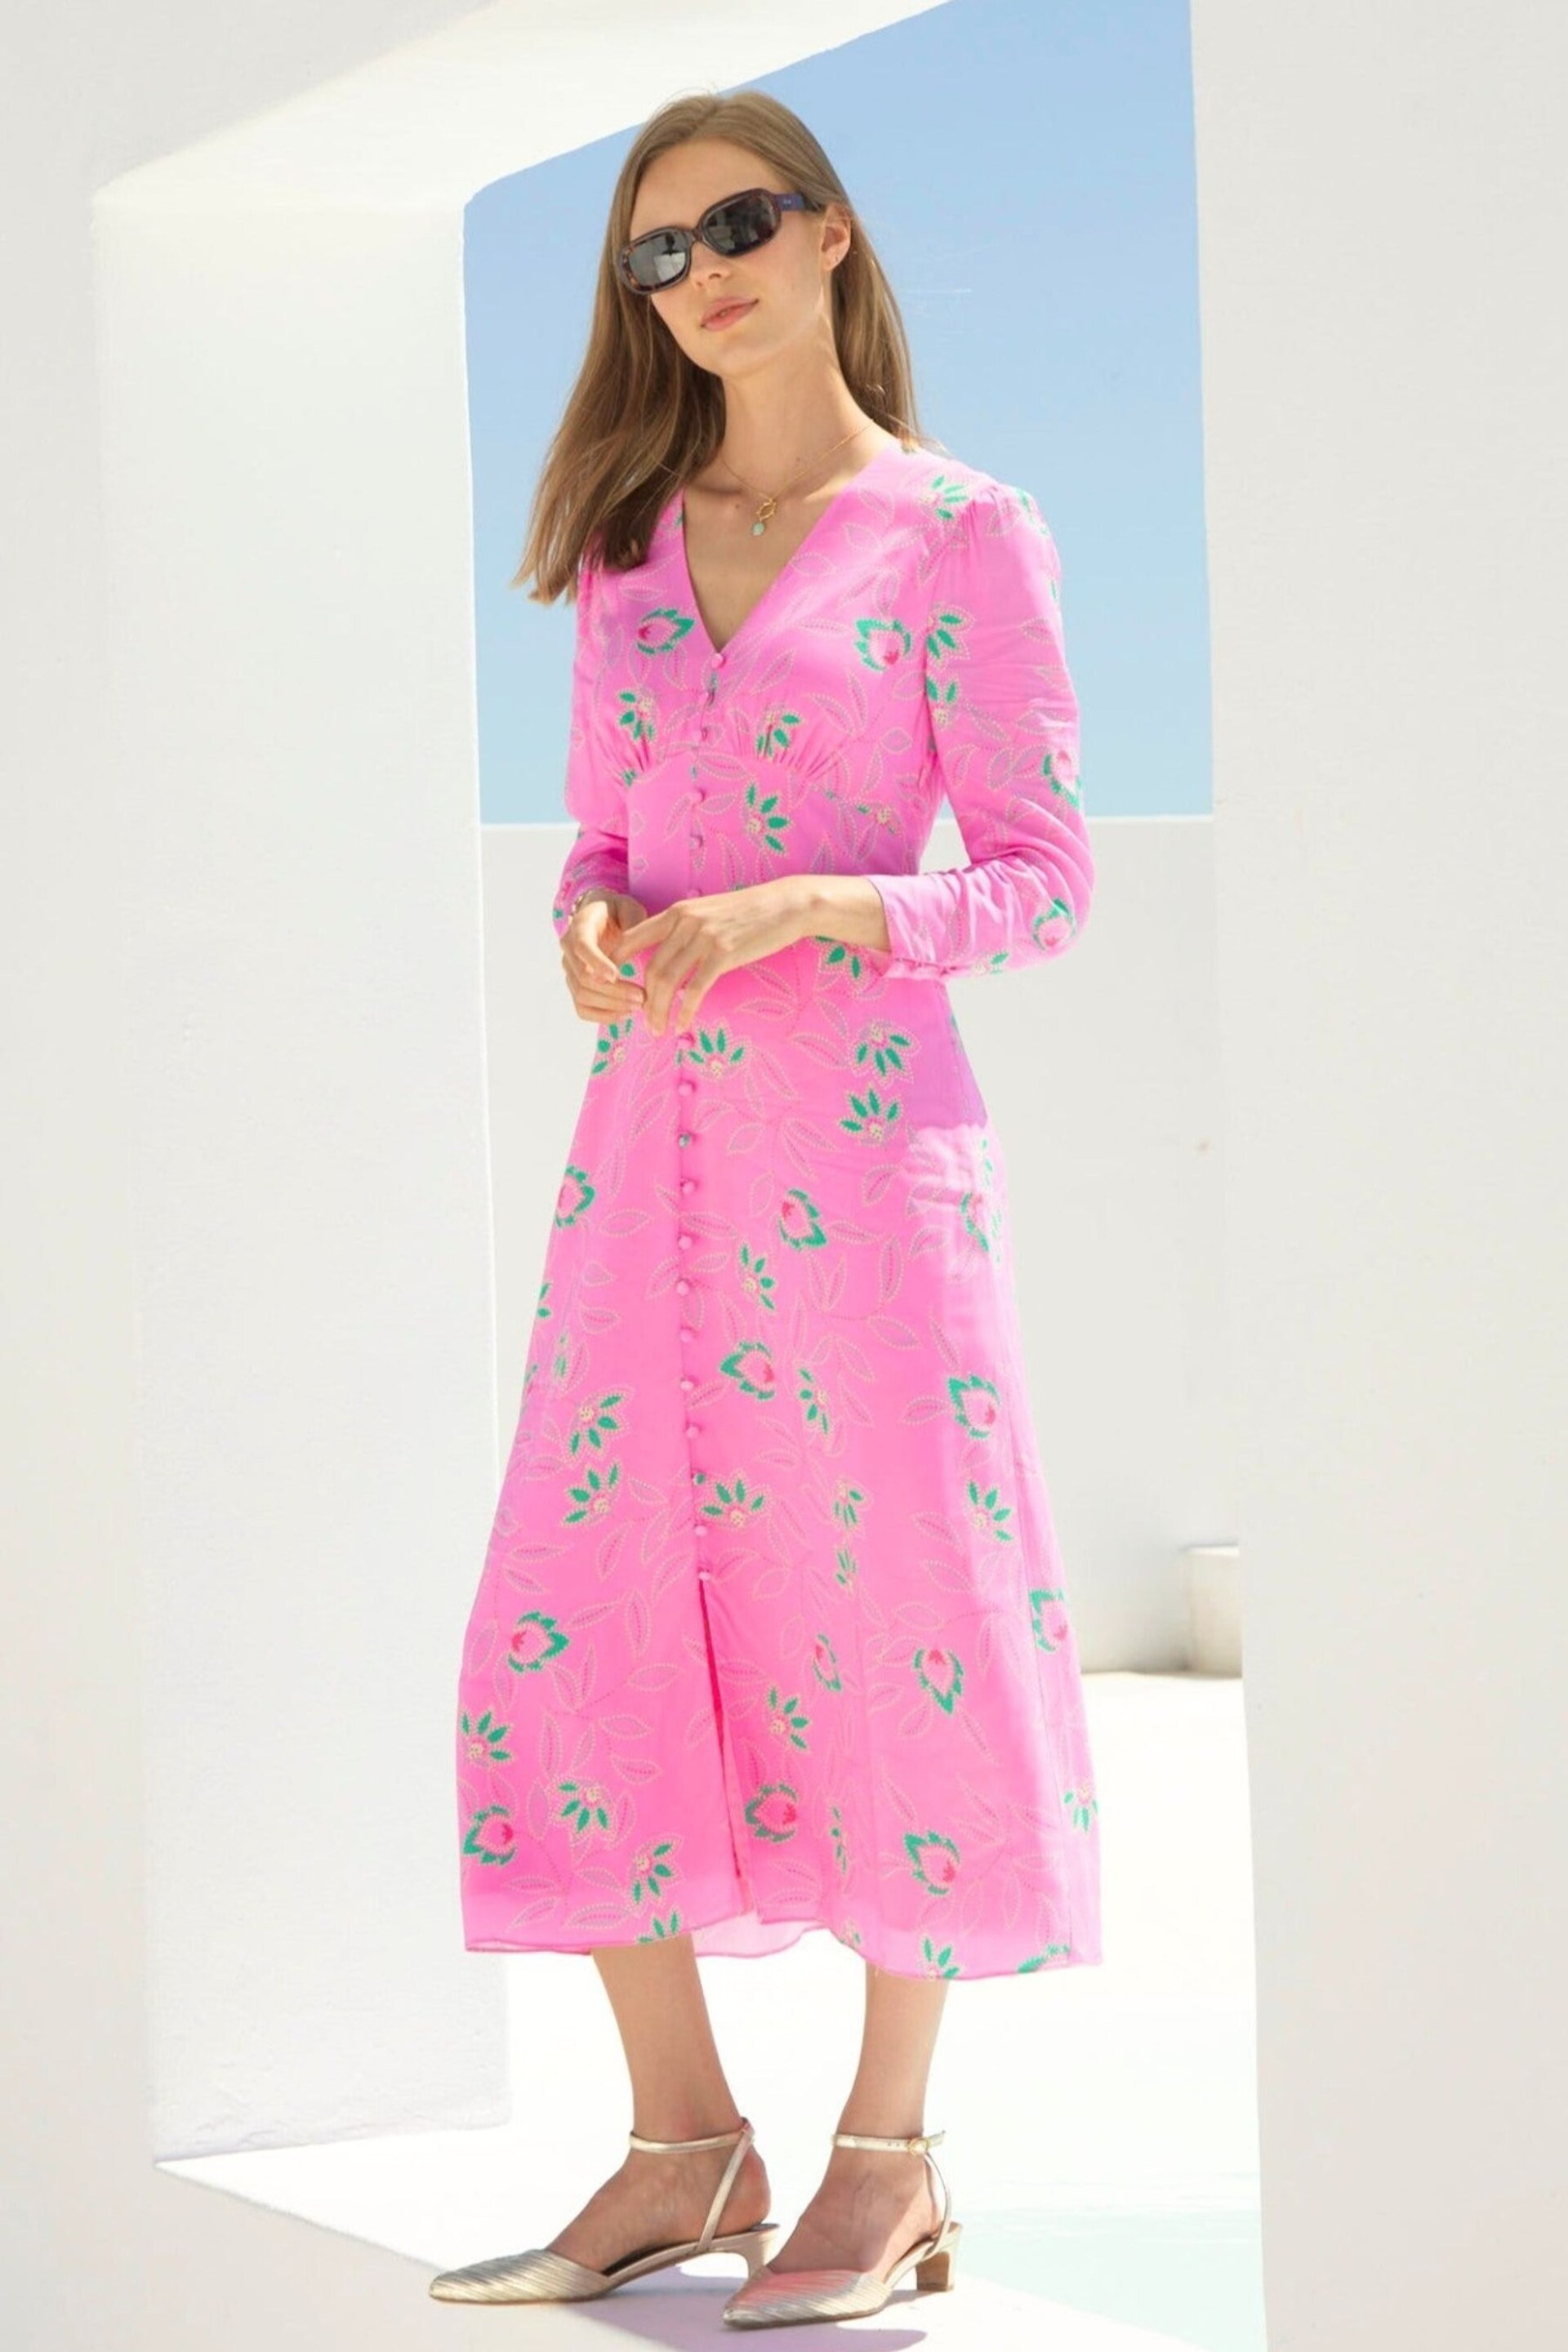 Aspiga Pink Claudia Dress - Image 8 of 8